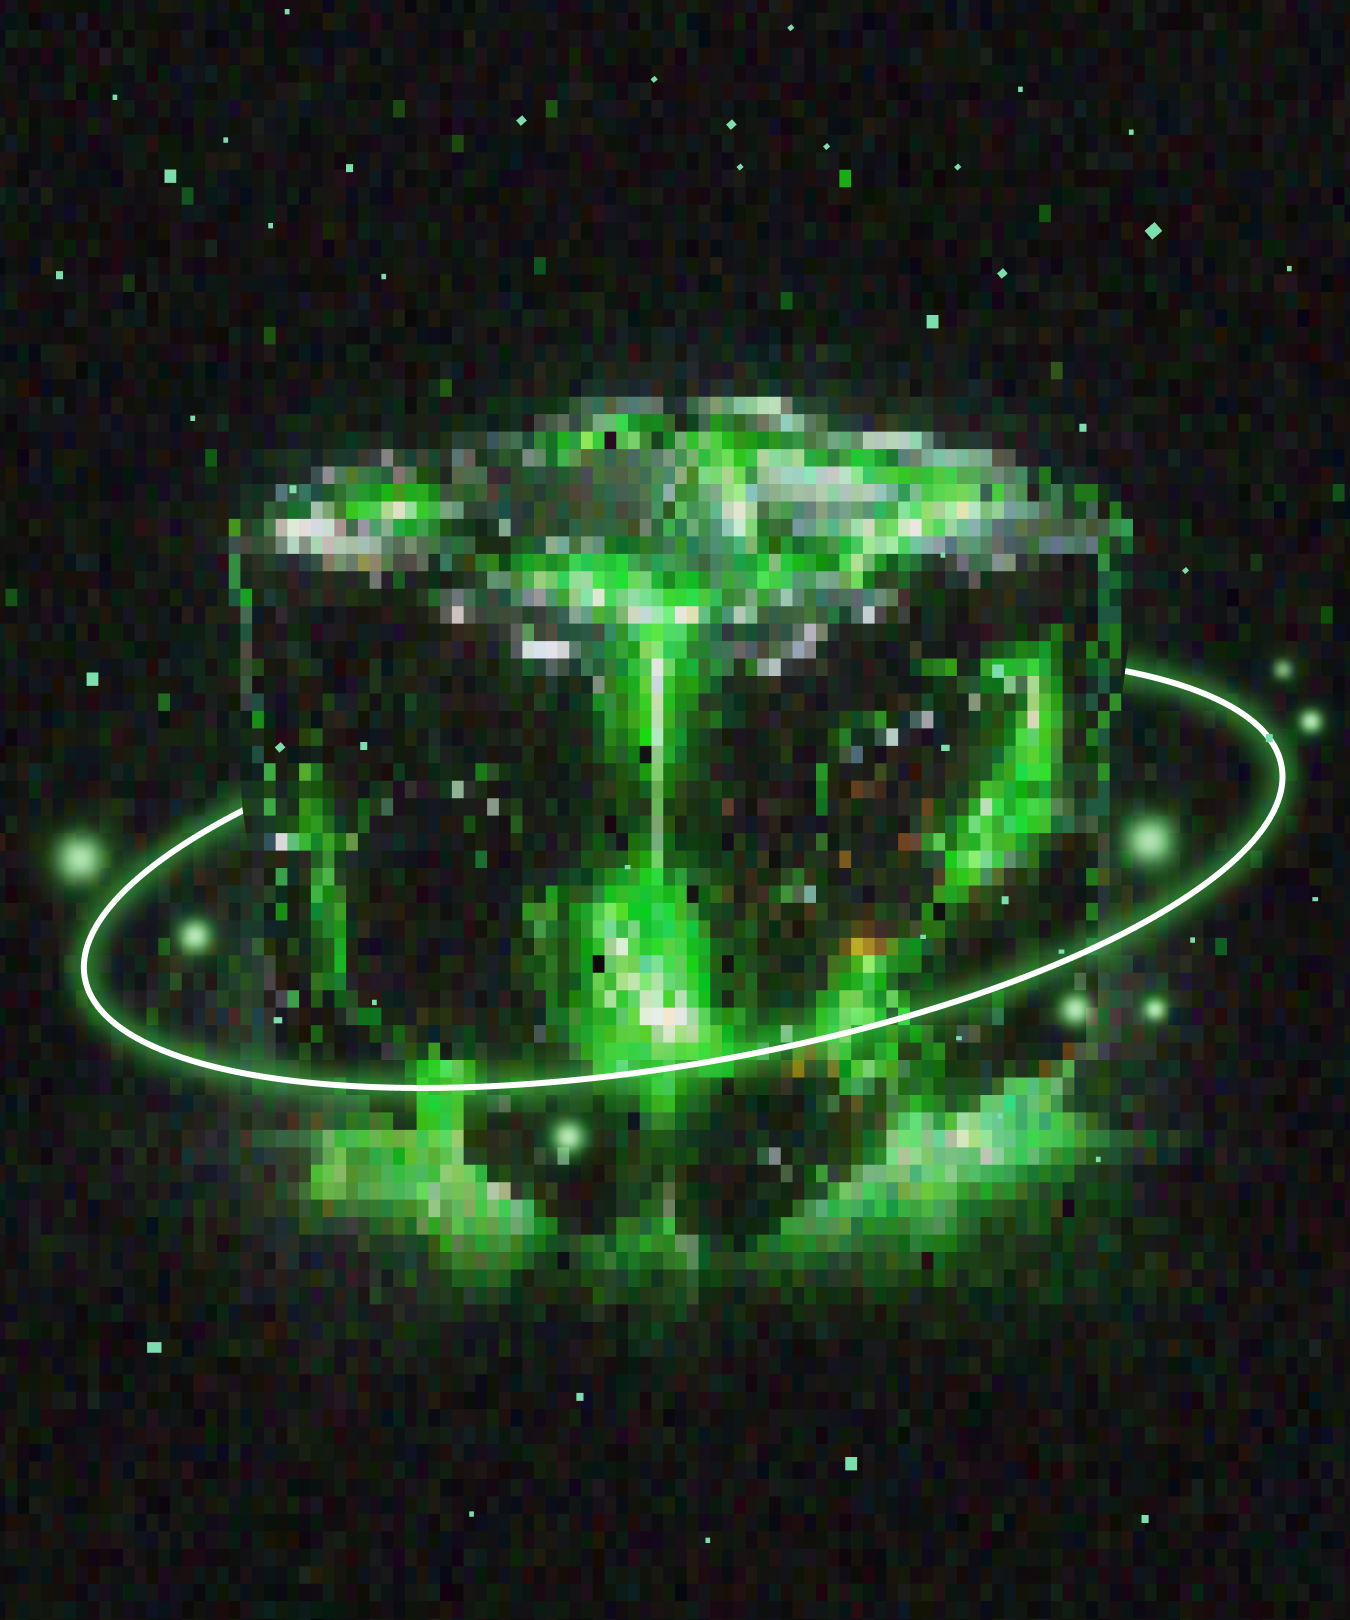 Nebula Stealth - Mind FHEllow | OpenSea